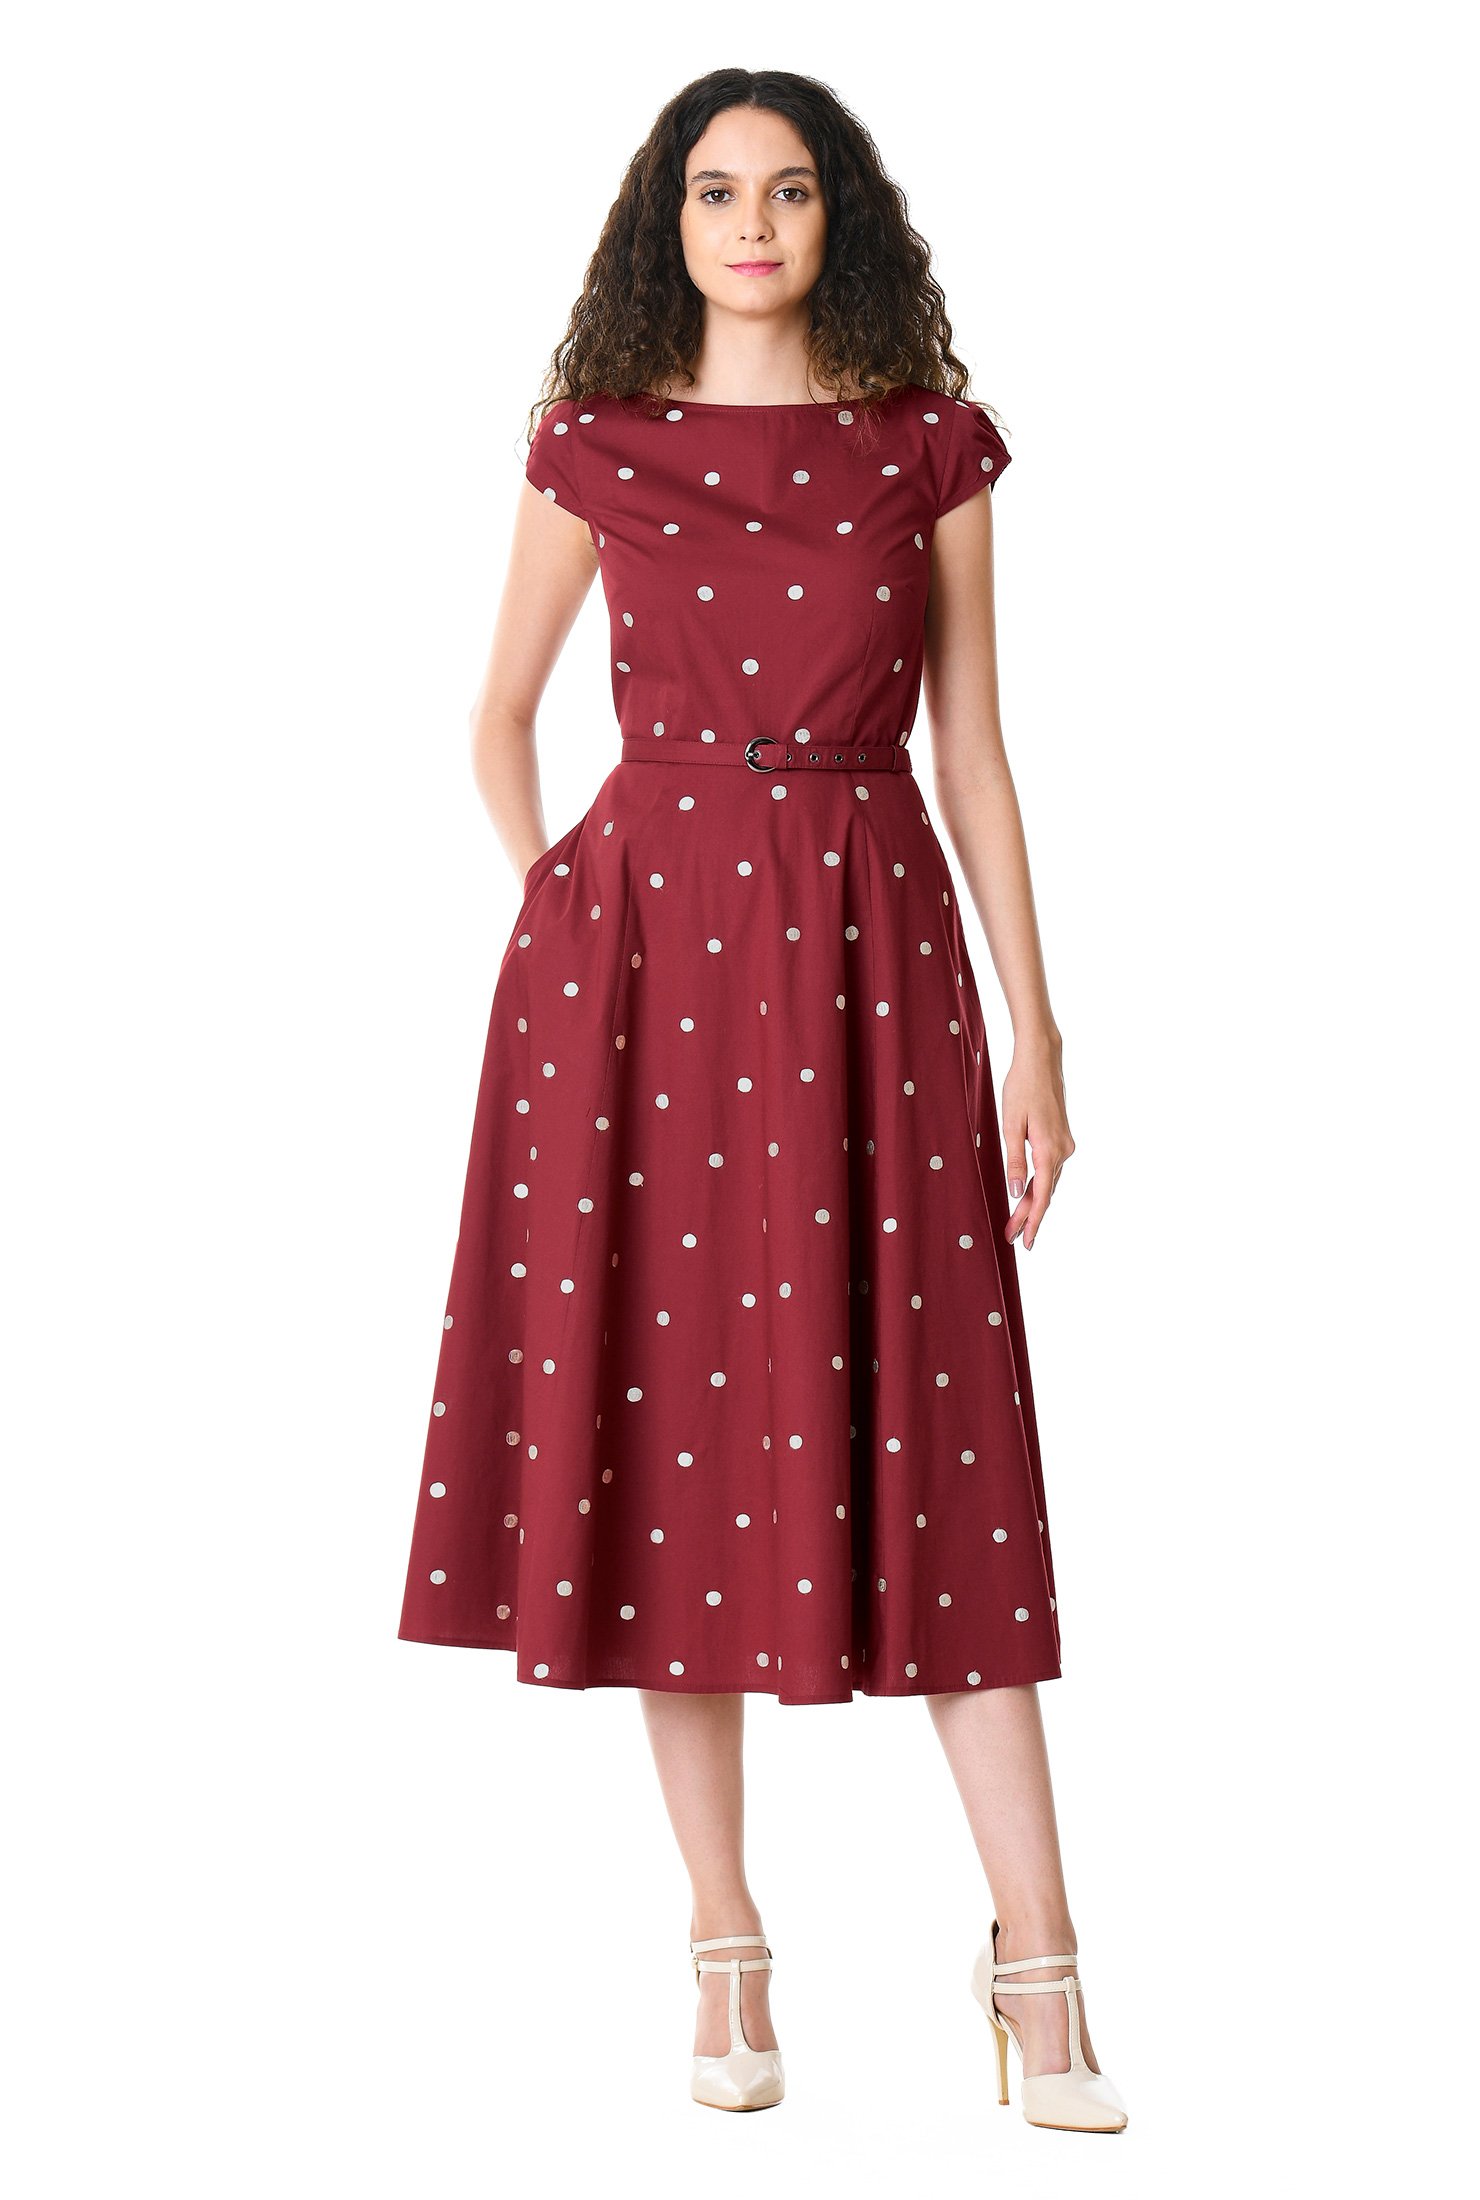 Shop Polka dot embellished cotton poplin dress | eShakti